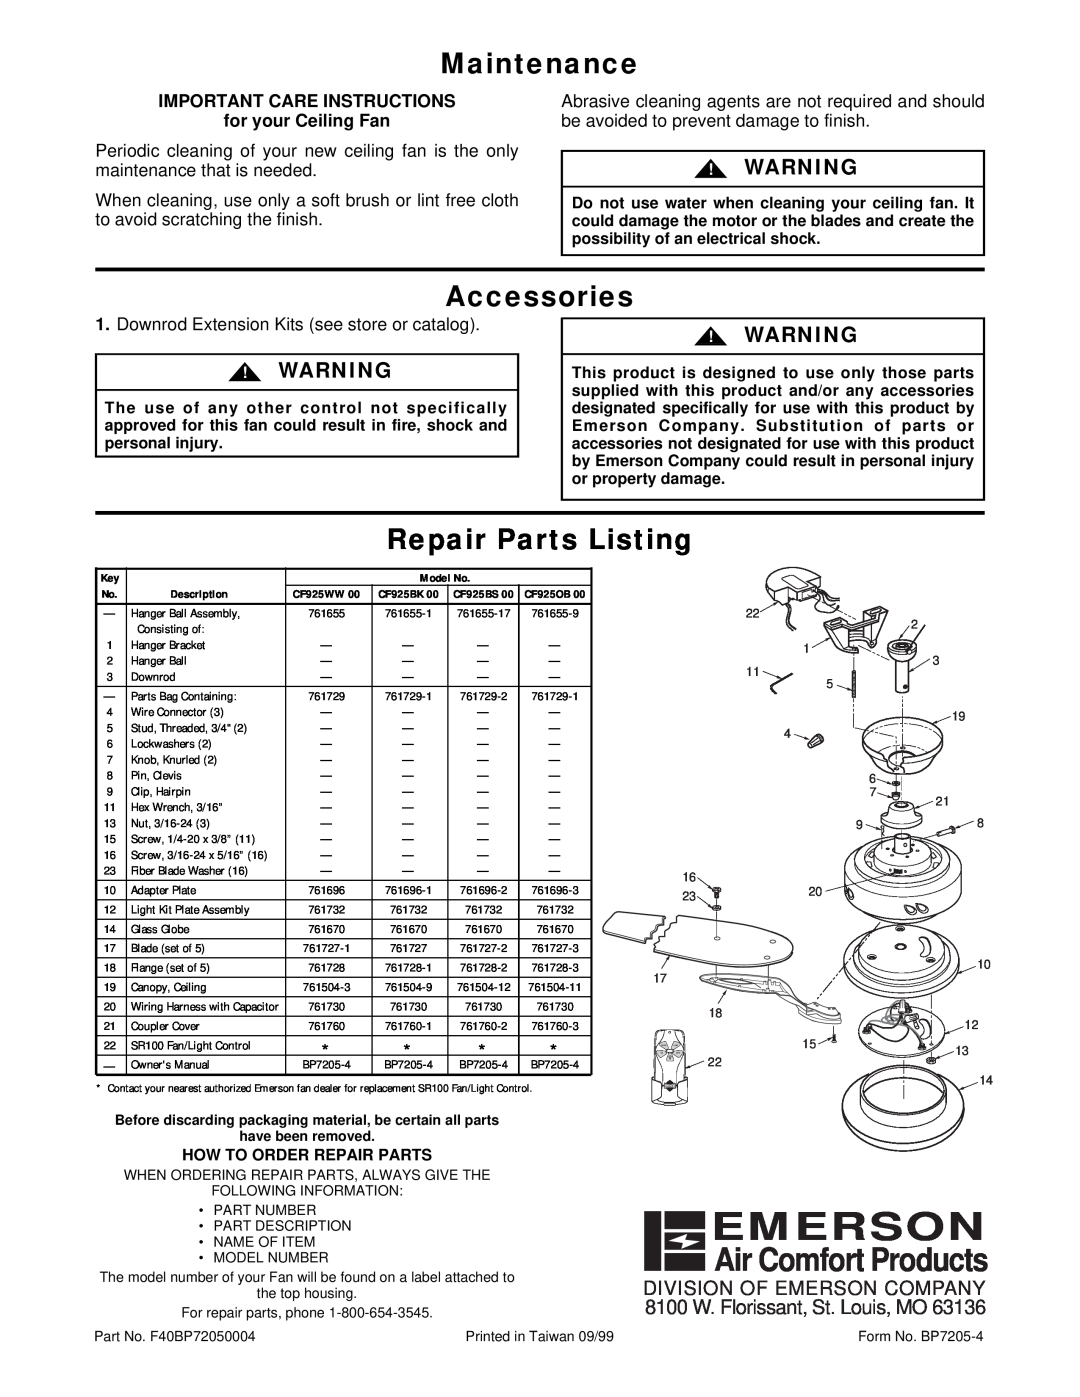 Emerson CF925BK00, CF925WW00, CF925BS00 Maintenance, Accessories, Repair Parts Listing, Emerson, Air Comfort Products 